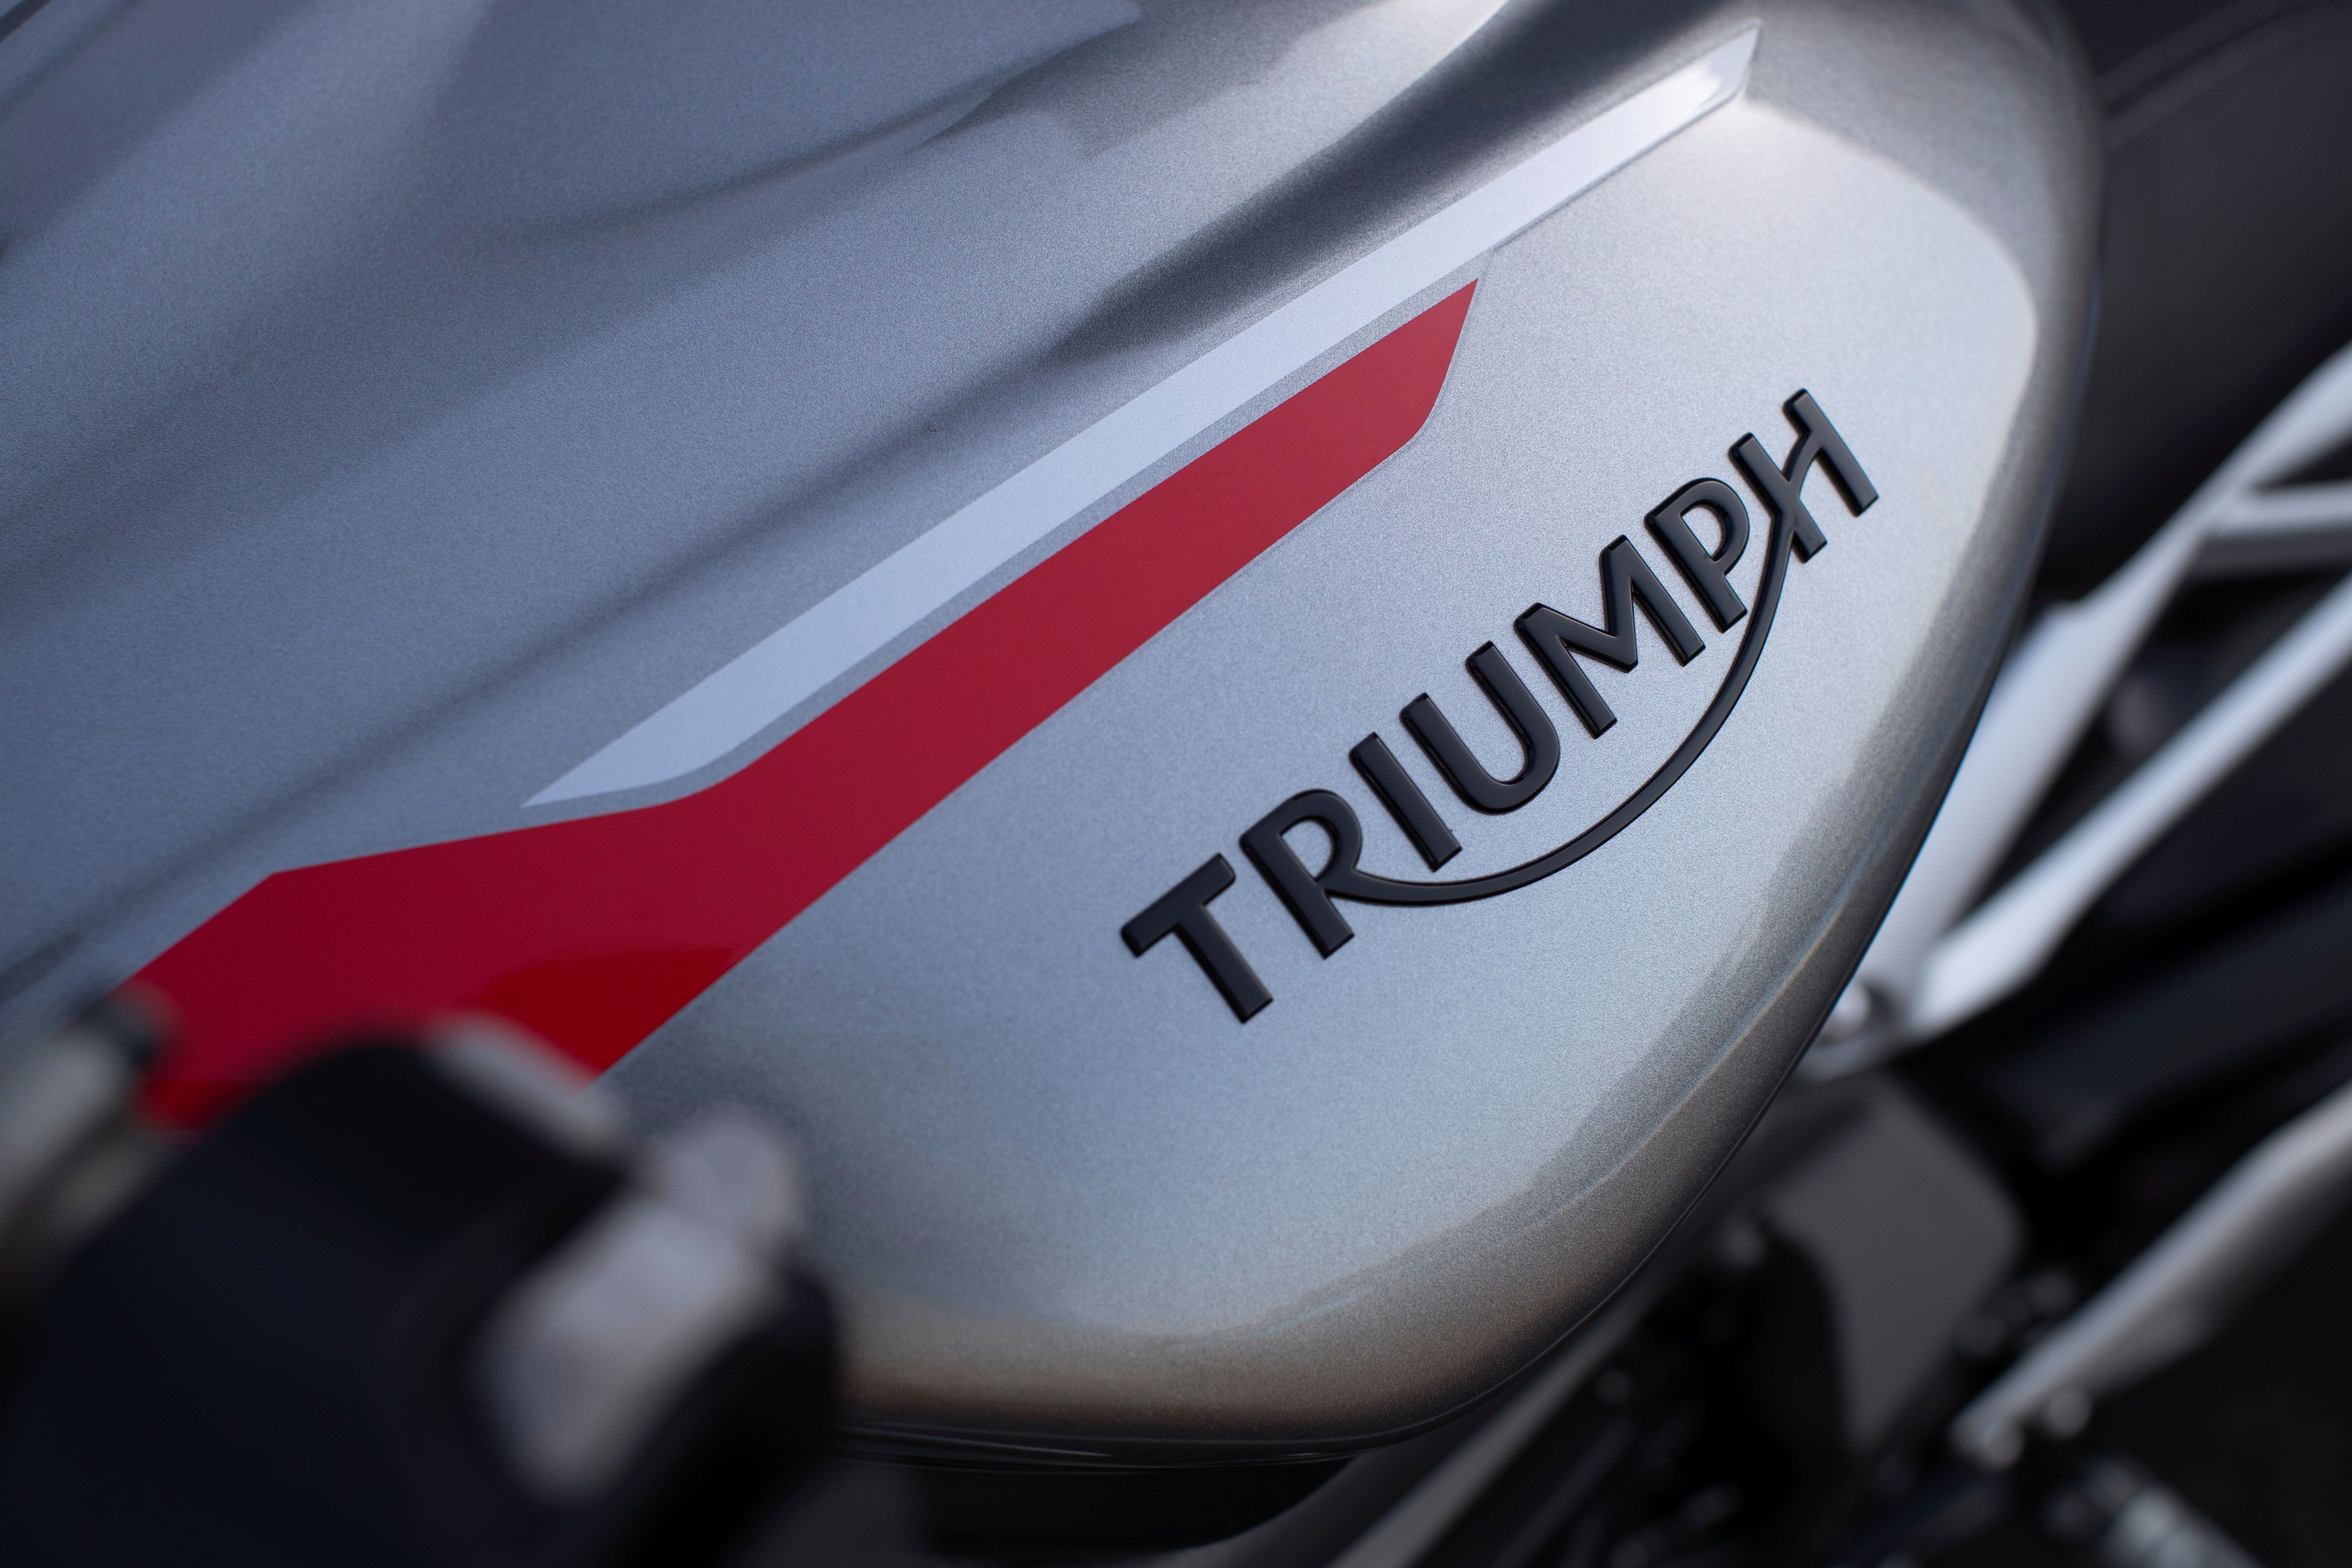 2020 Triumph Street Triple RS